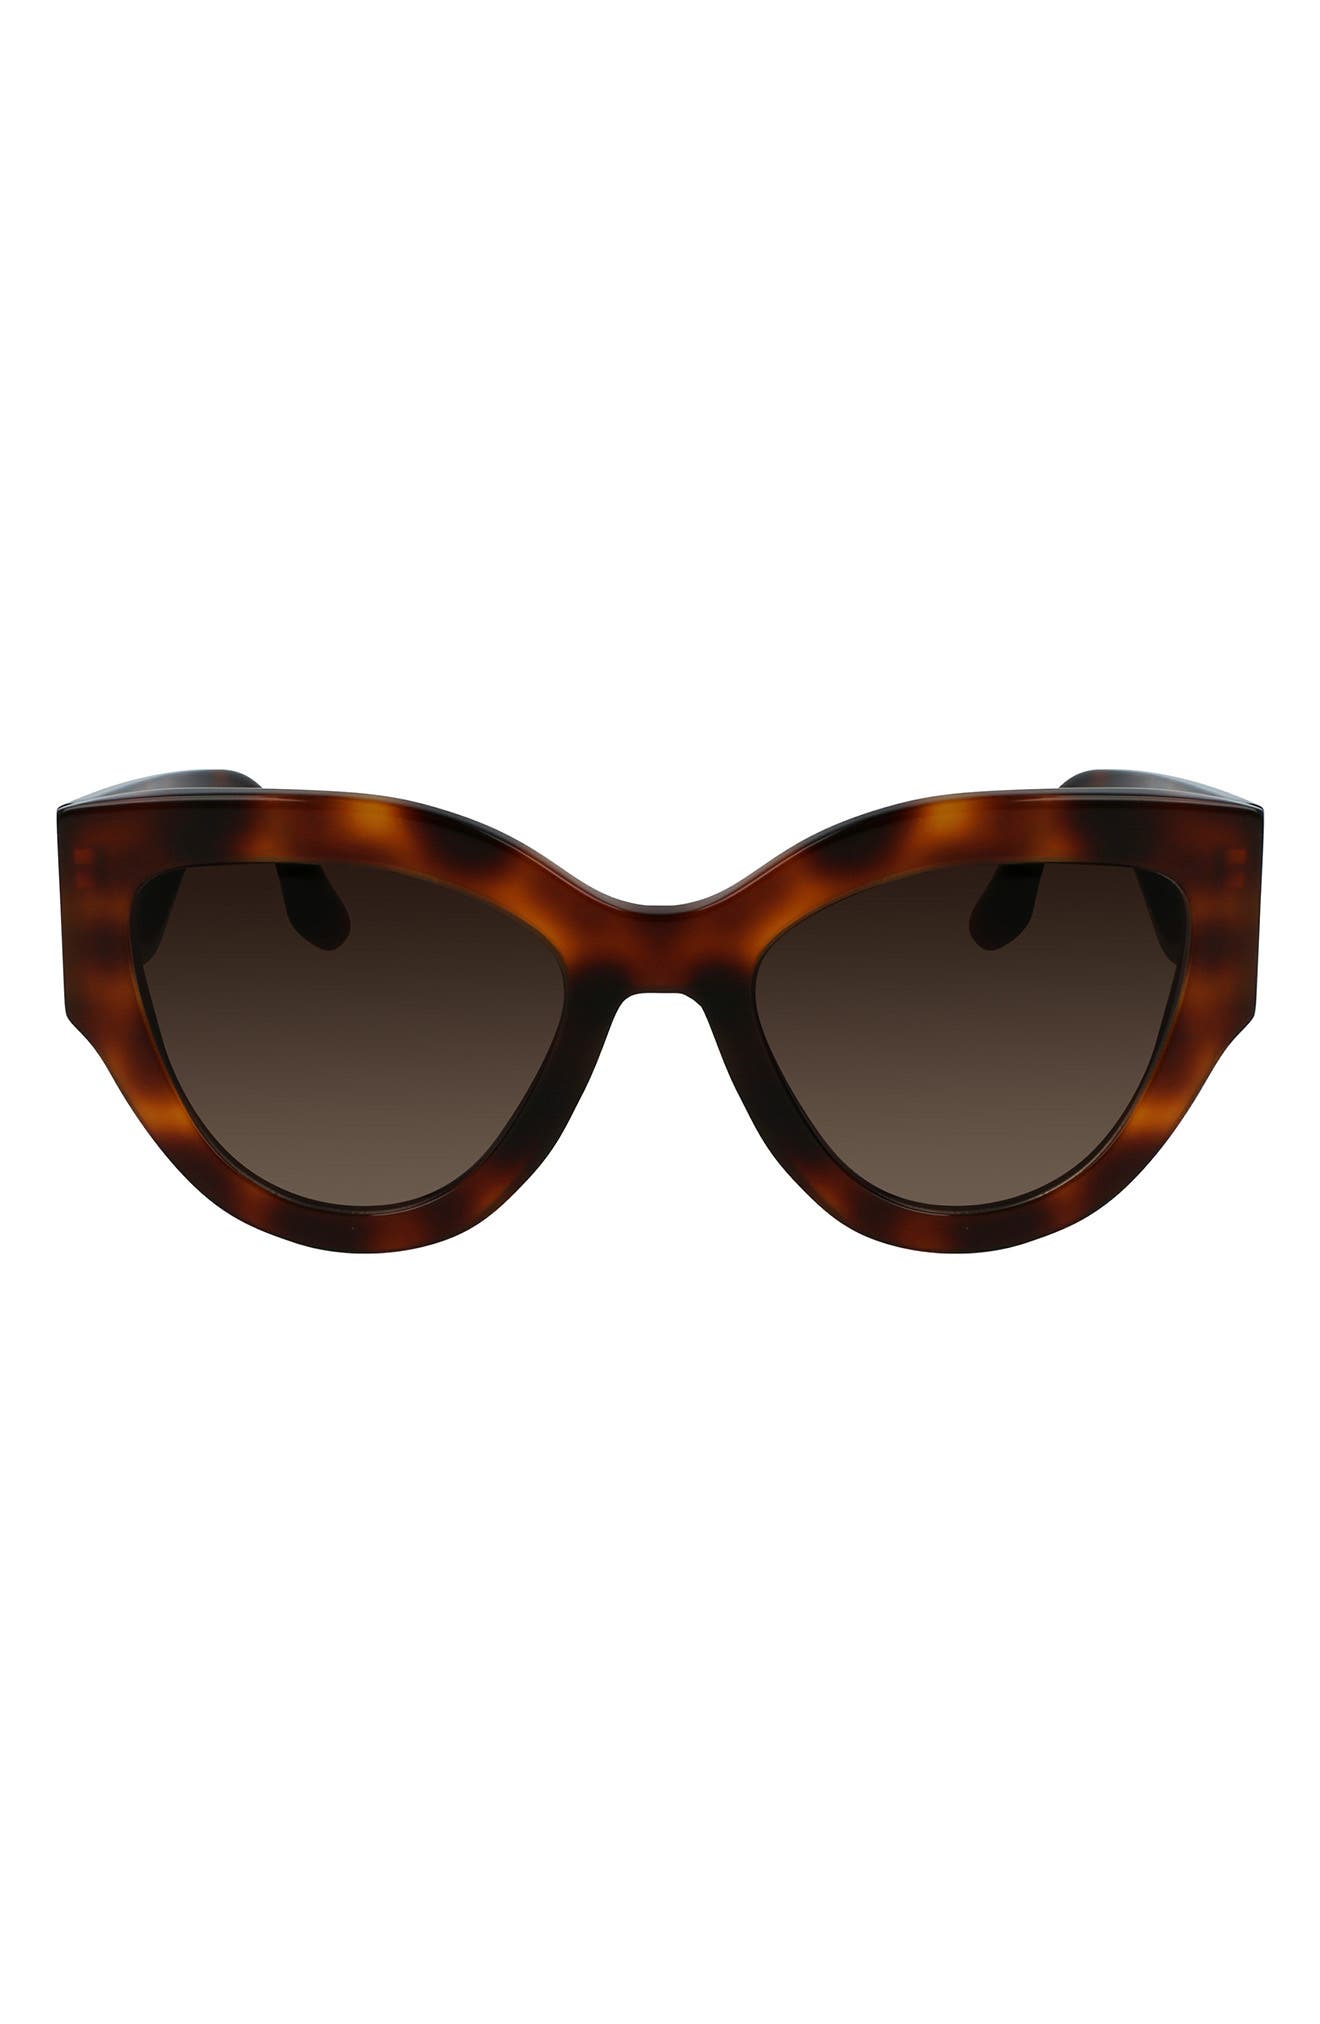 Victoria Beckham Classic Logo 55mm Cat Eye Sunglasses in Tortoise at Nordstrom